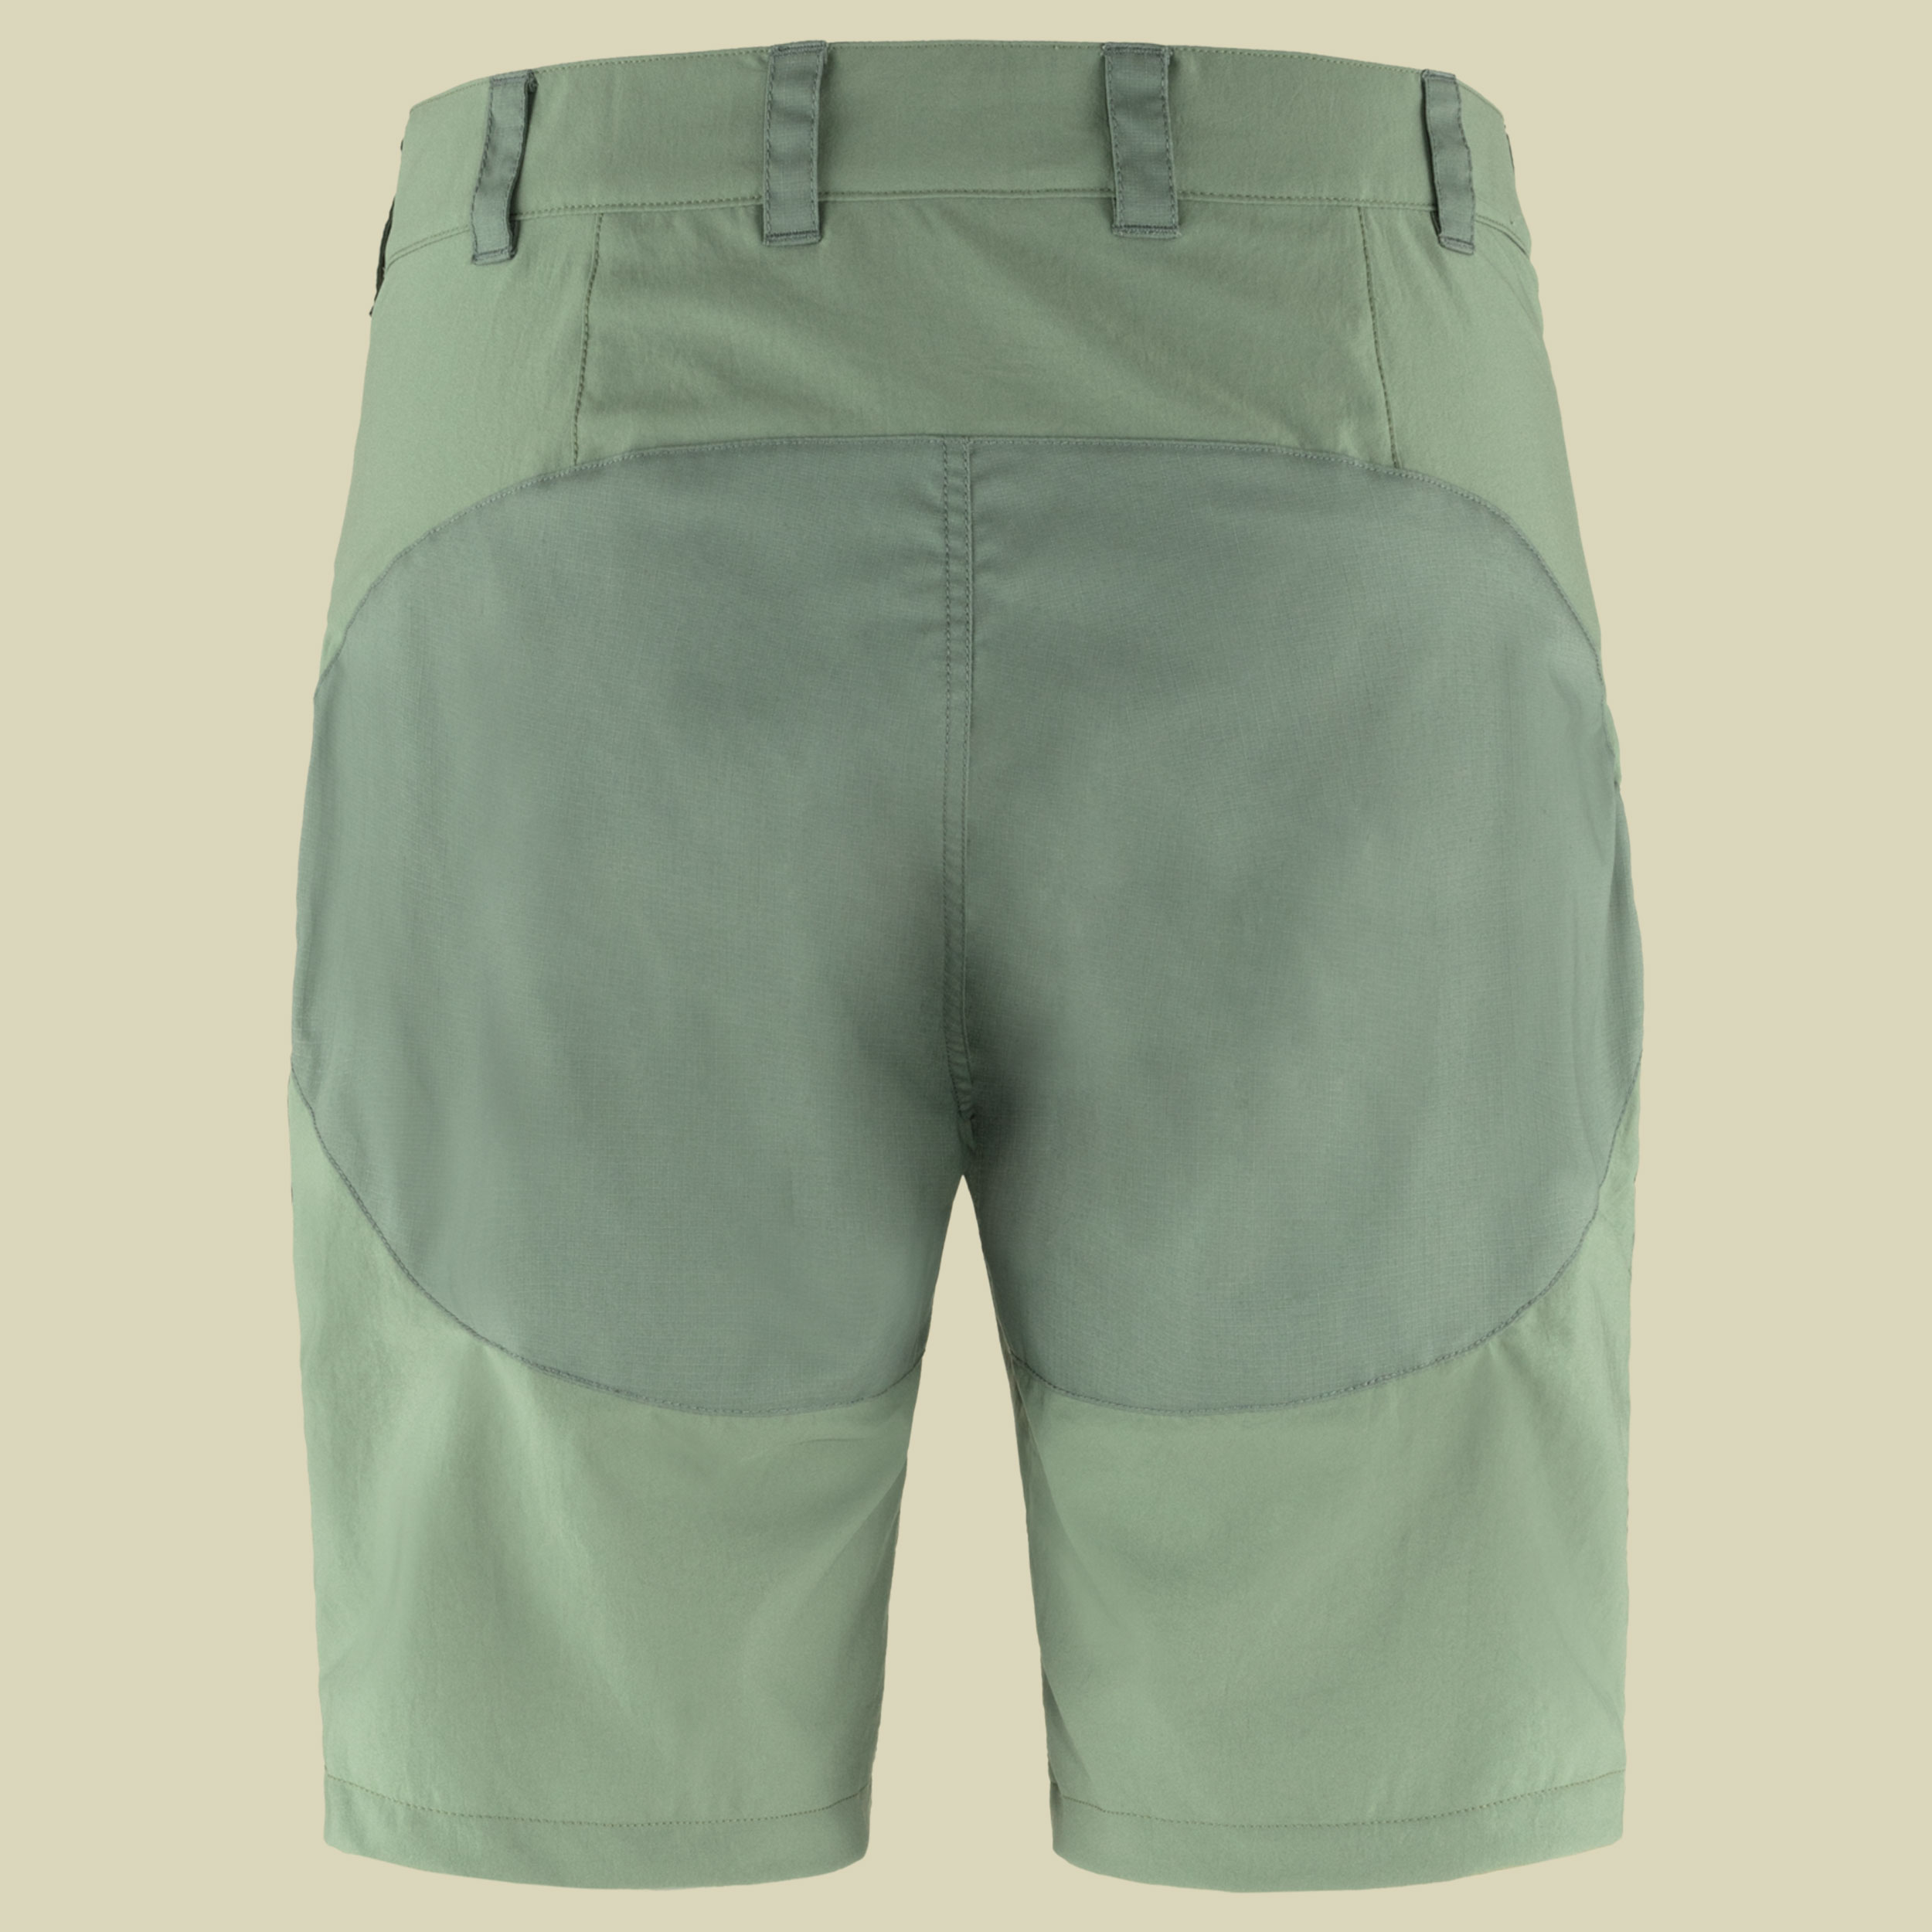 Abisko Midsummer Shorts Women Größe 42 Farbe jade green-patina green